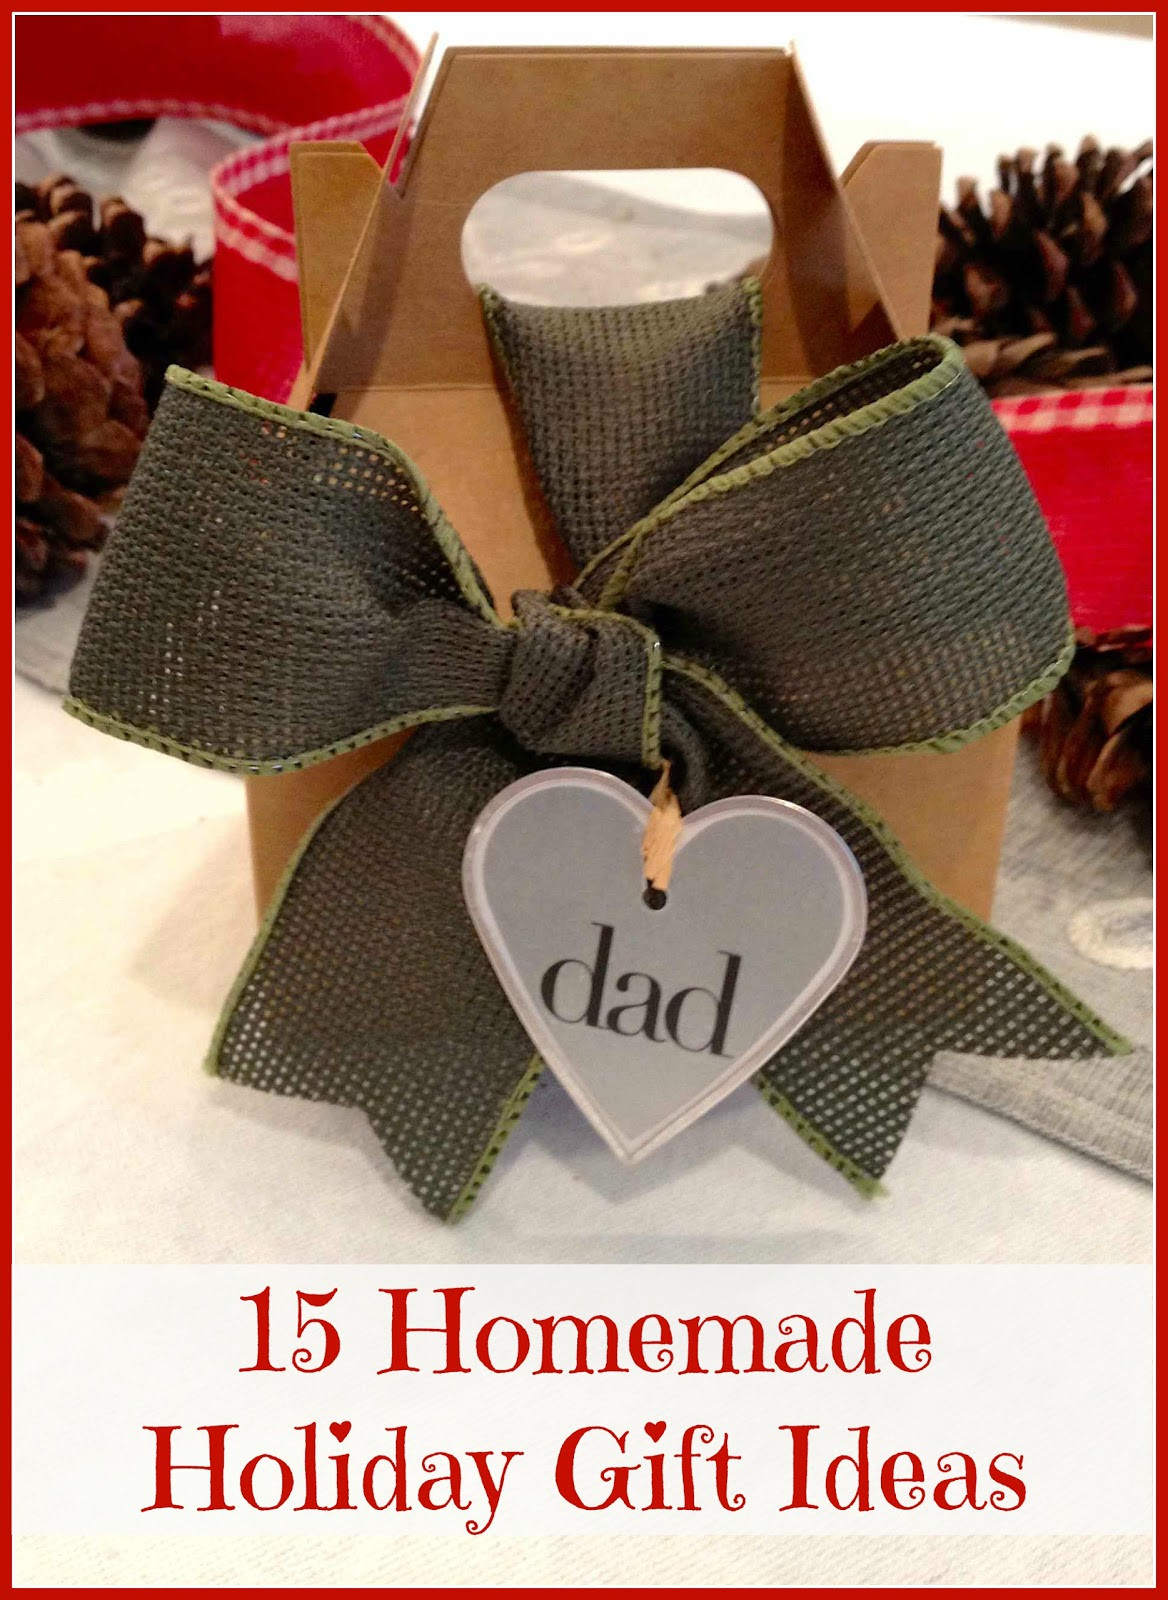 Handmade Holiday Gift Ideas
 Homemade Christmas Gifts Ideas You ll Love